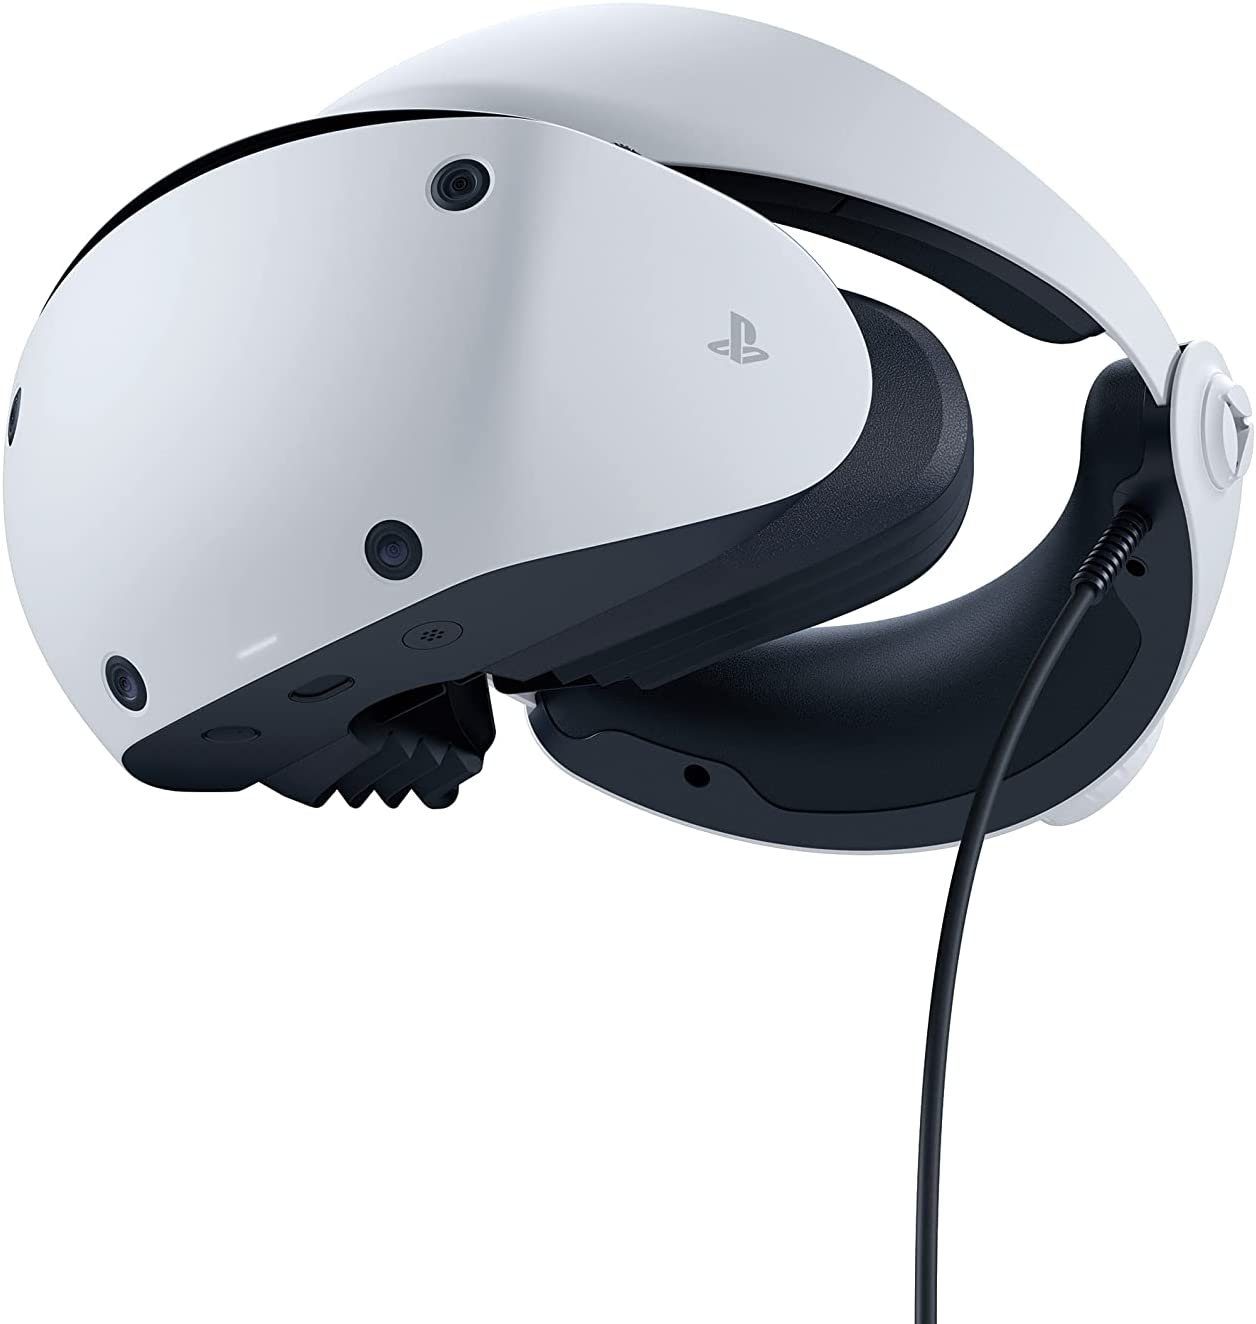 Sony Sony PlayStation VR2 Virtual-Reality-Brille